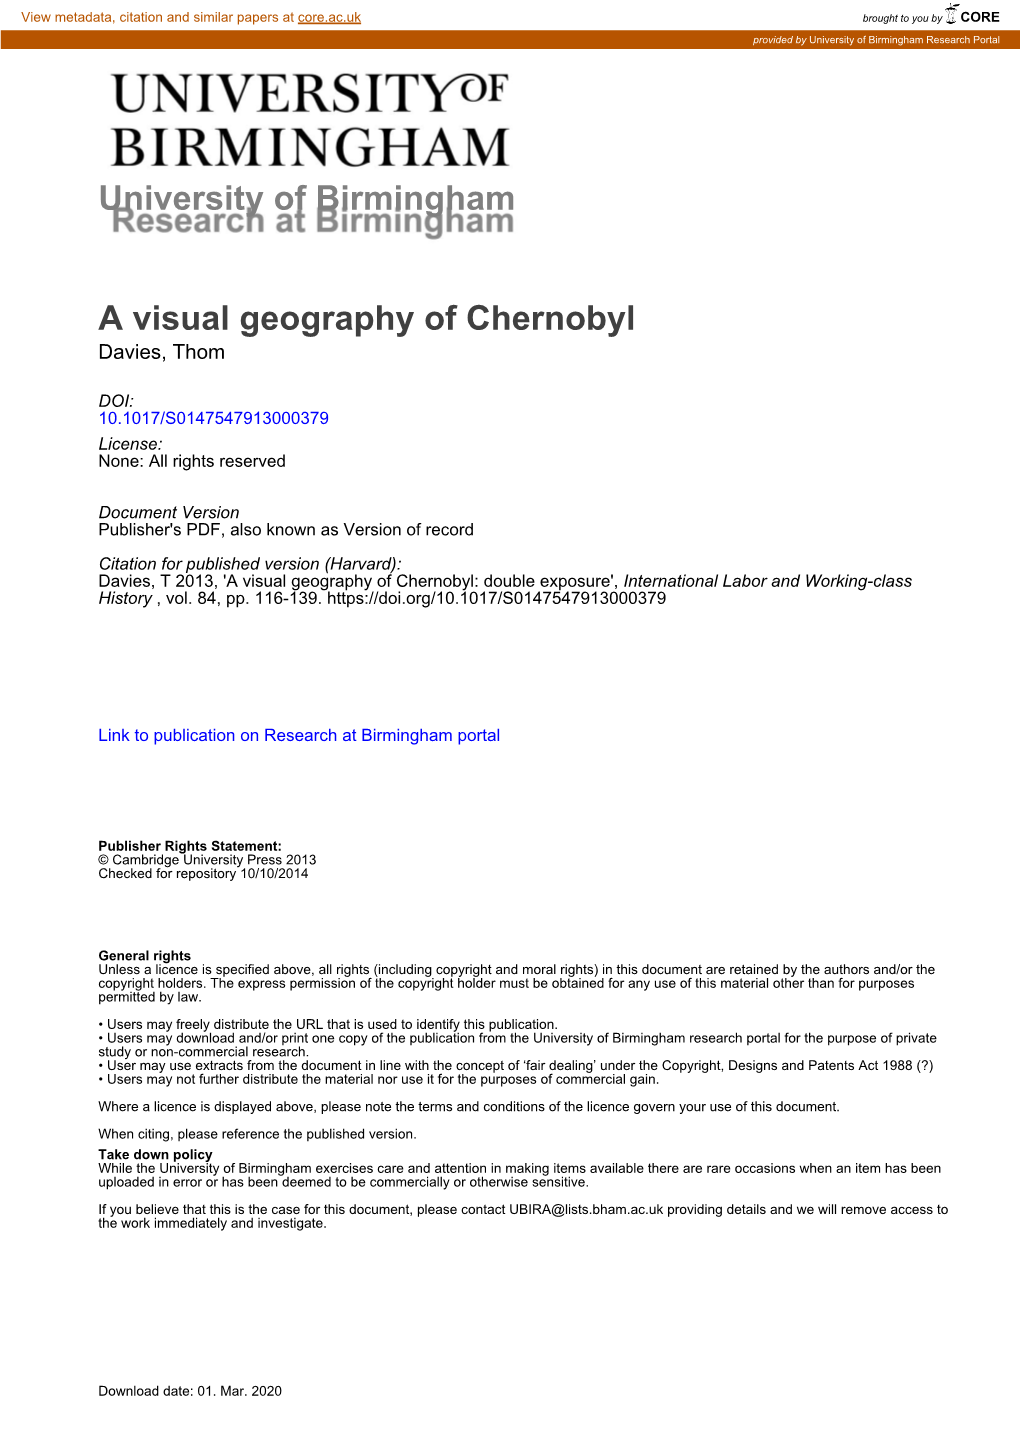 University of Birmingham a Visual Geography of Chernobyl